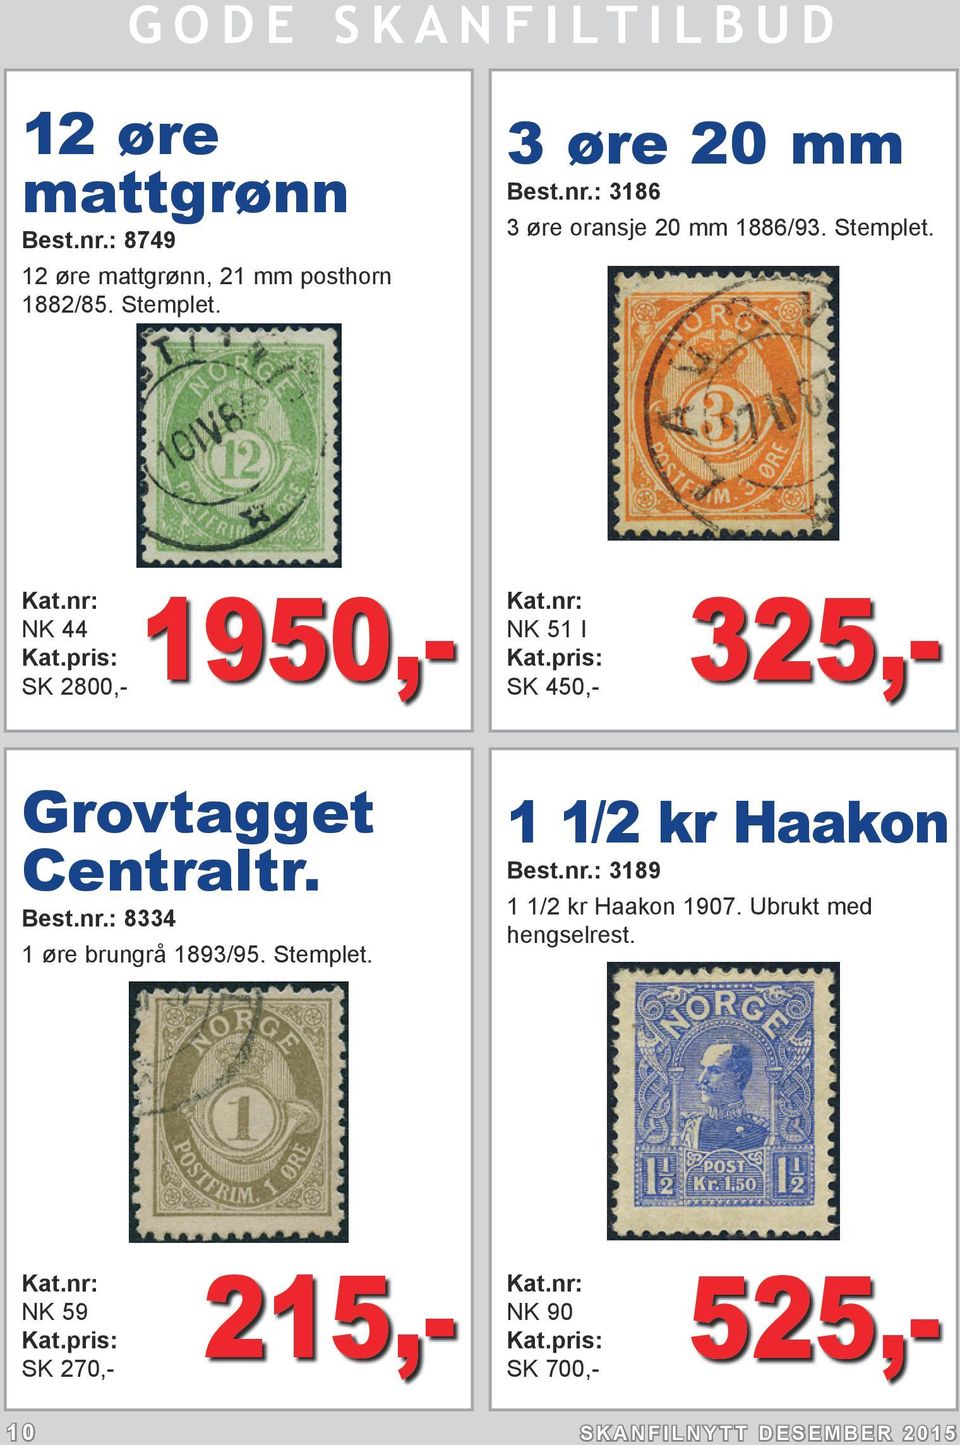 : 8334 1 øre brungrå 1893/95. Stemplet. 1 1/2 kr Haakon Best.nr.: 3189 1 1/2 kr Haakon 1907.